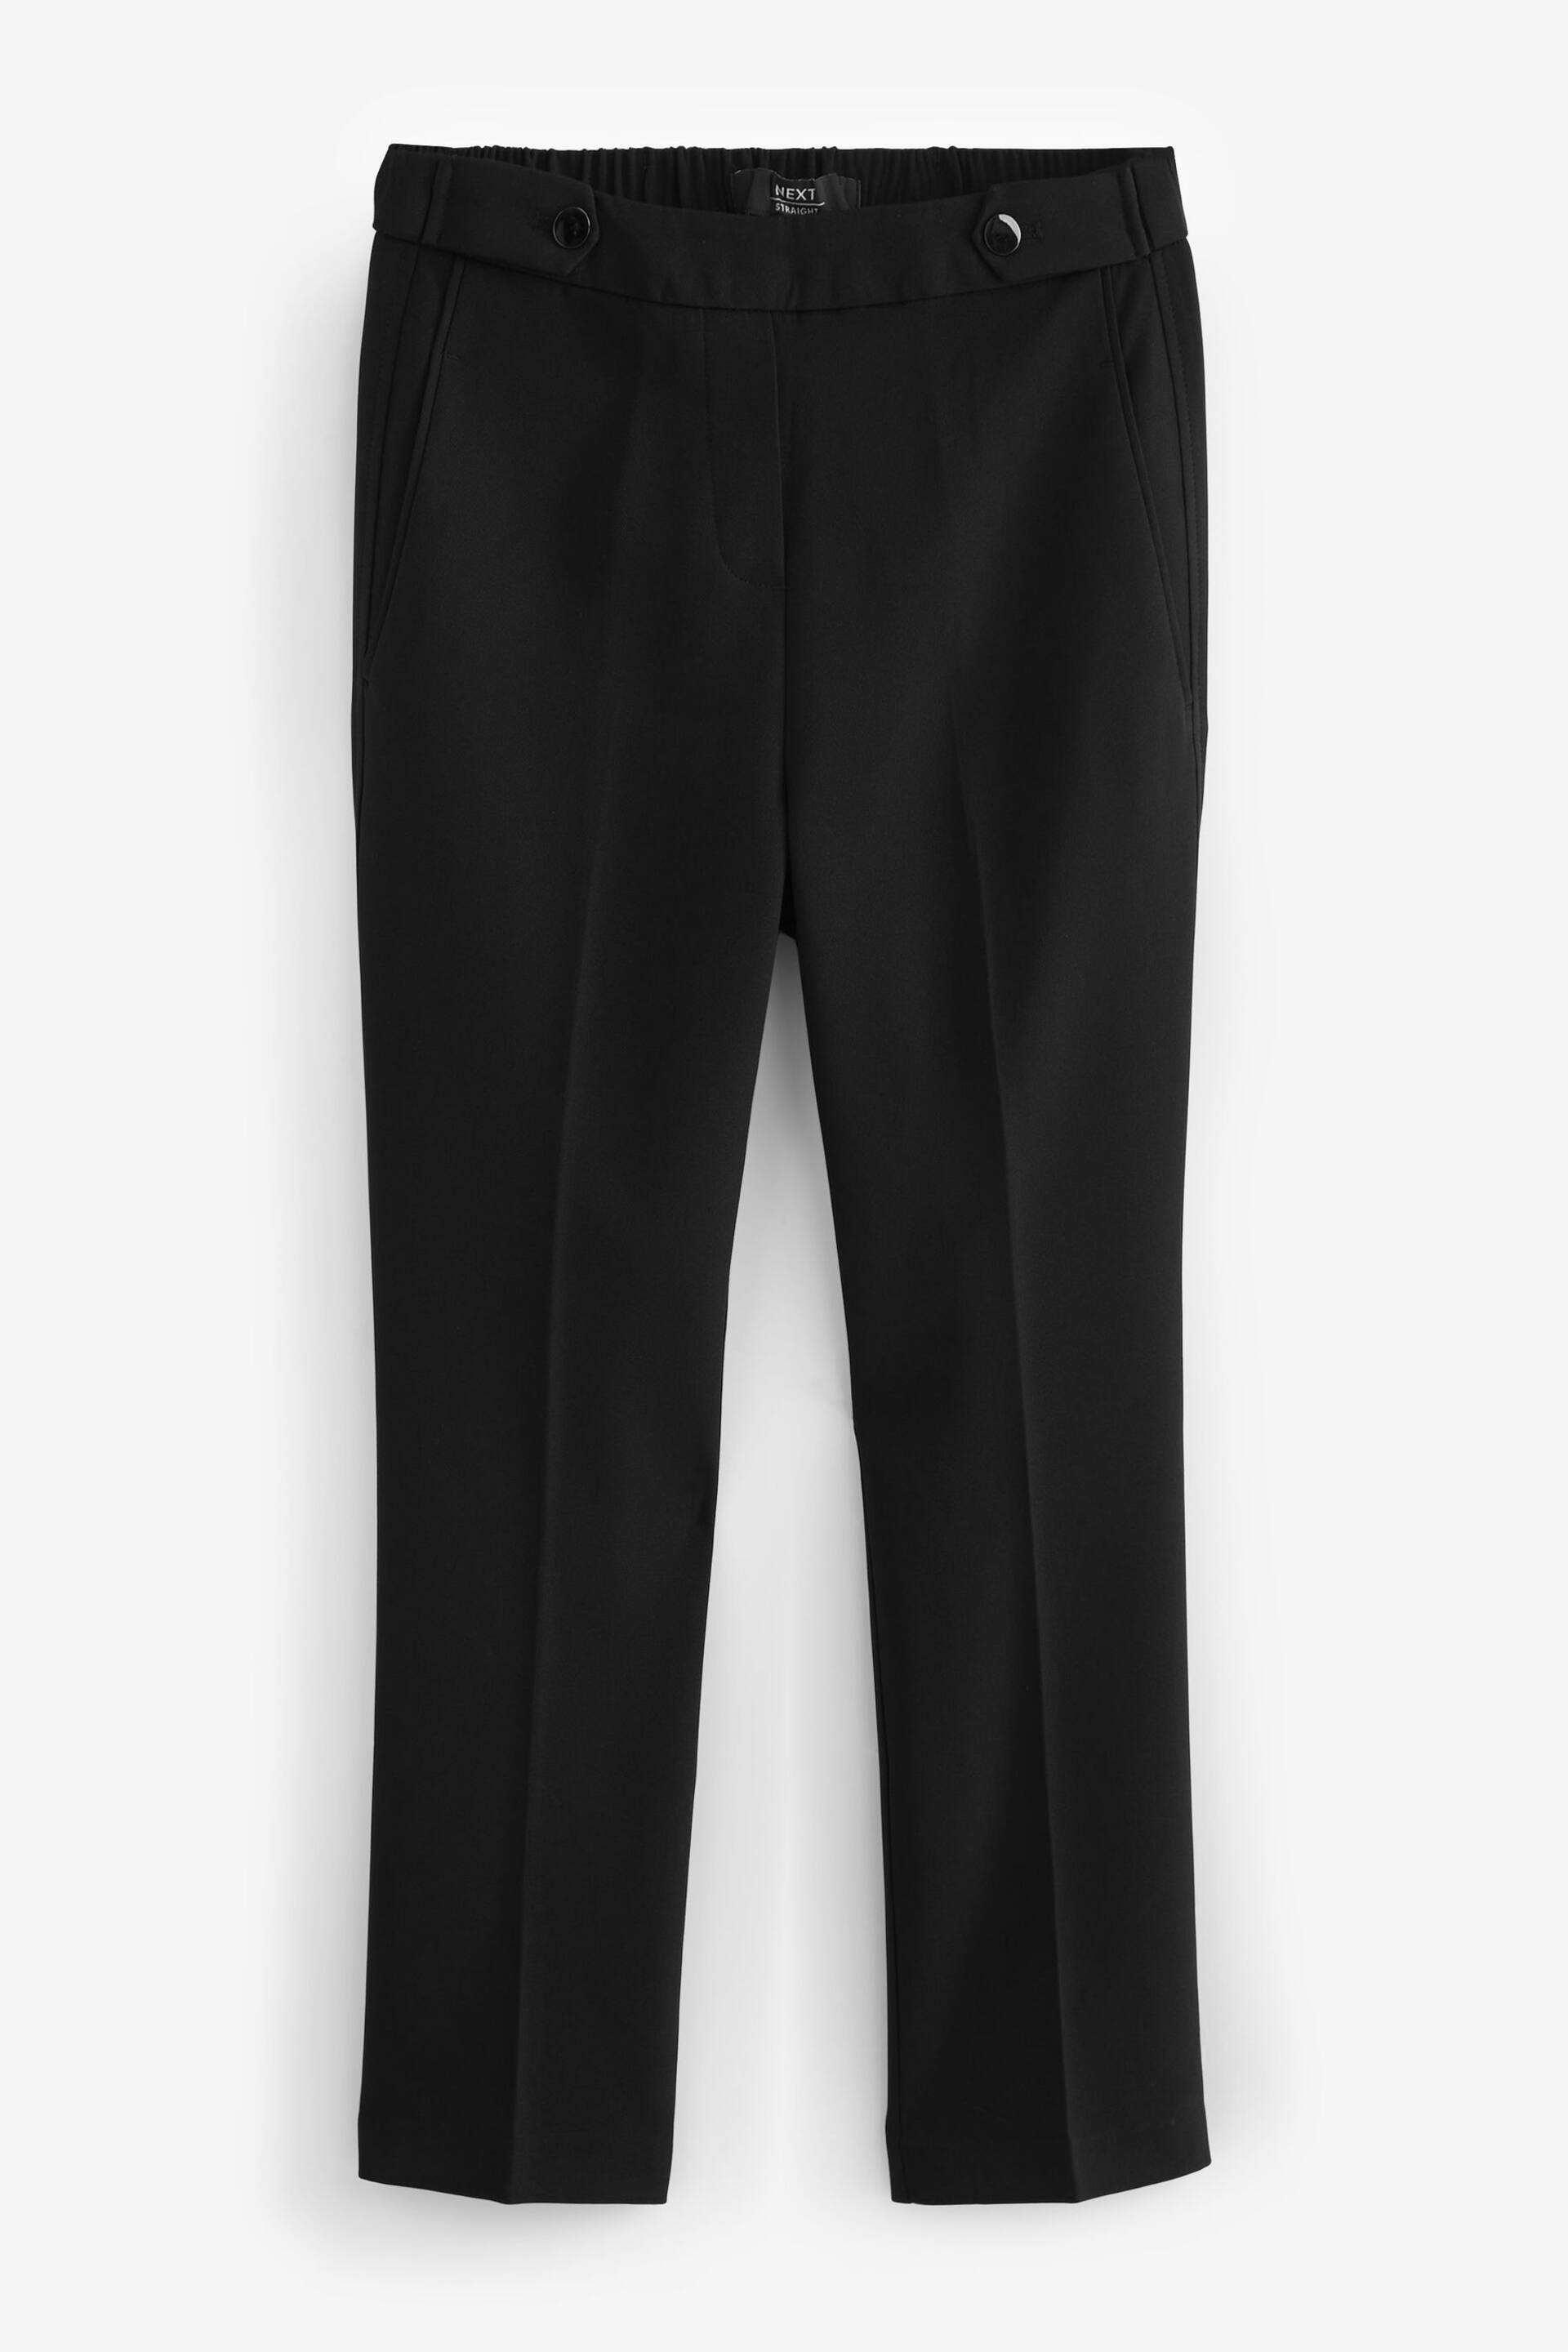 Black Tailored Elastic Back Straight Leg Trousers - Image 5 of 6